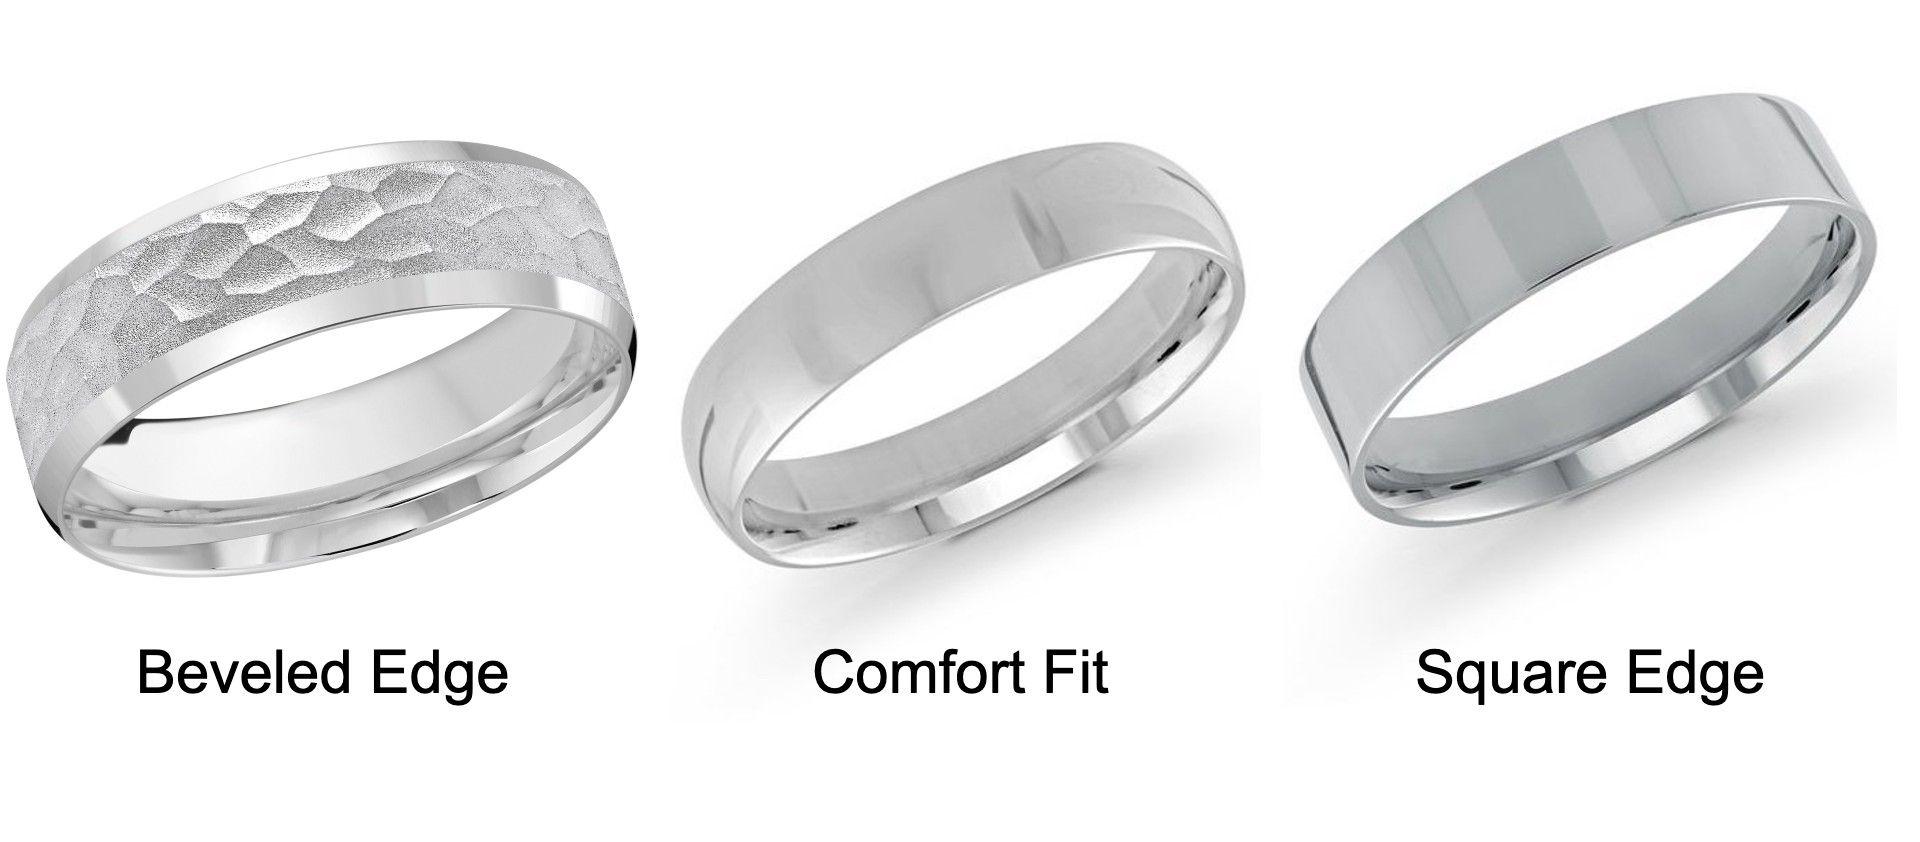 Flat vs round men's wedding bands (comfort fit vs standard fit)